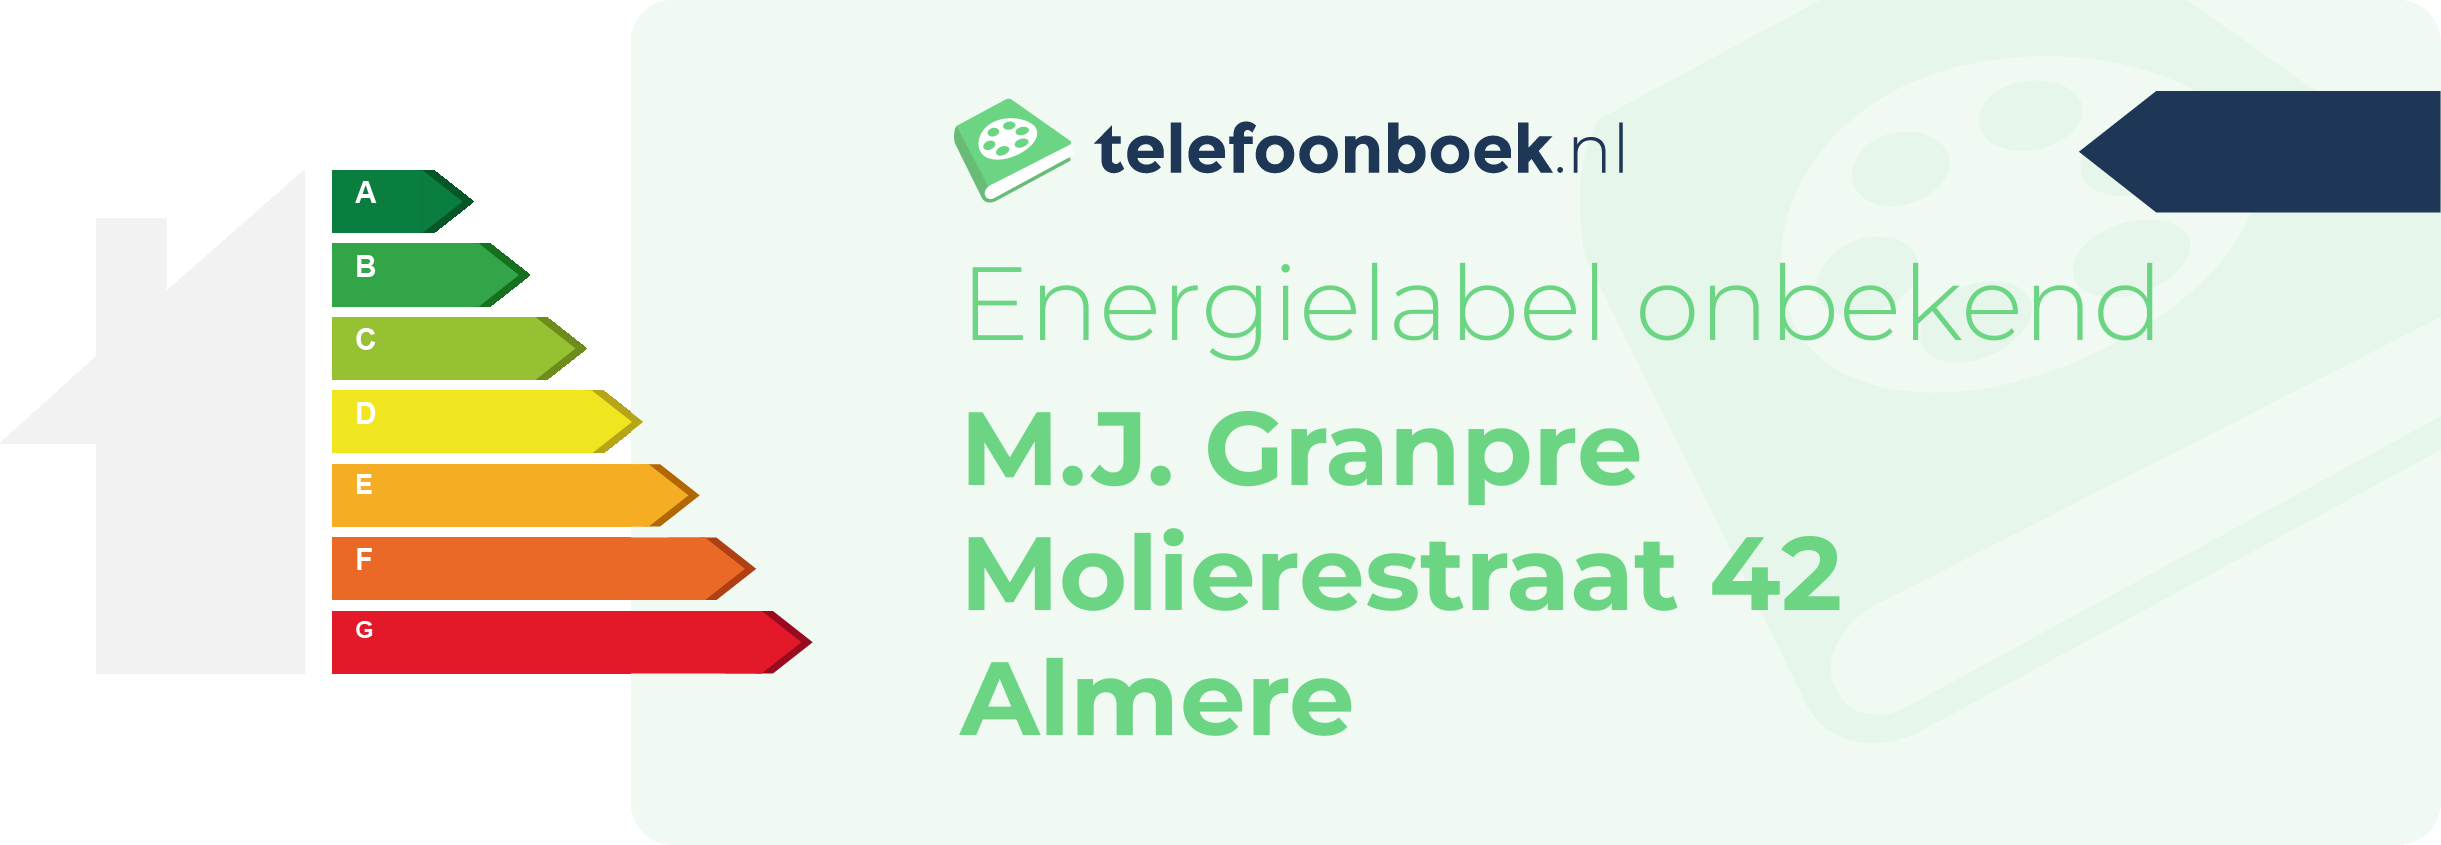 Energielabel M.J. Granpre Molierestraat 42 Almere